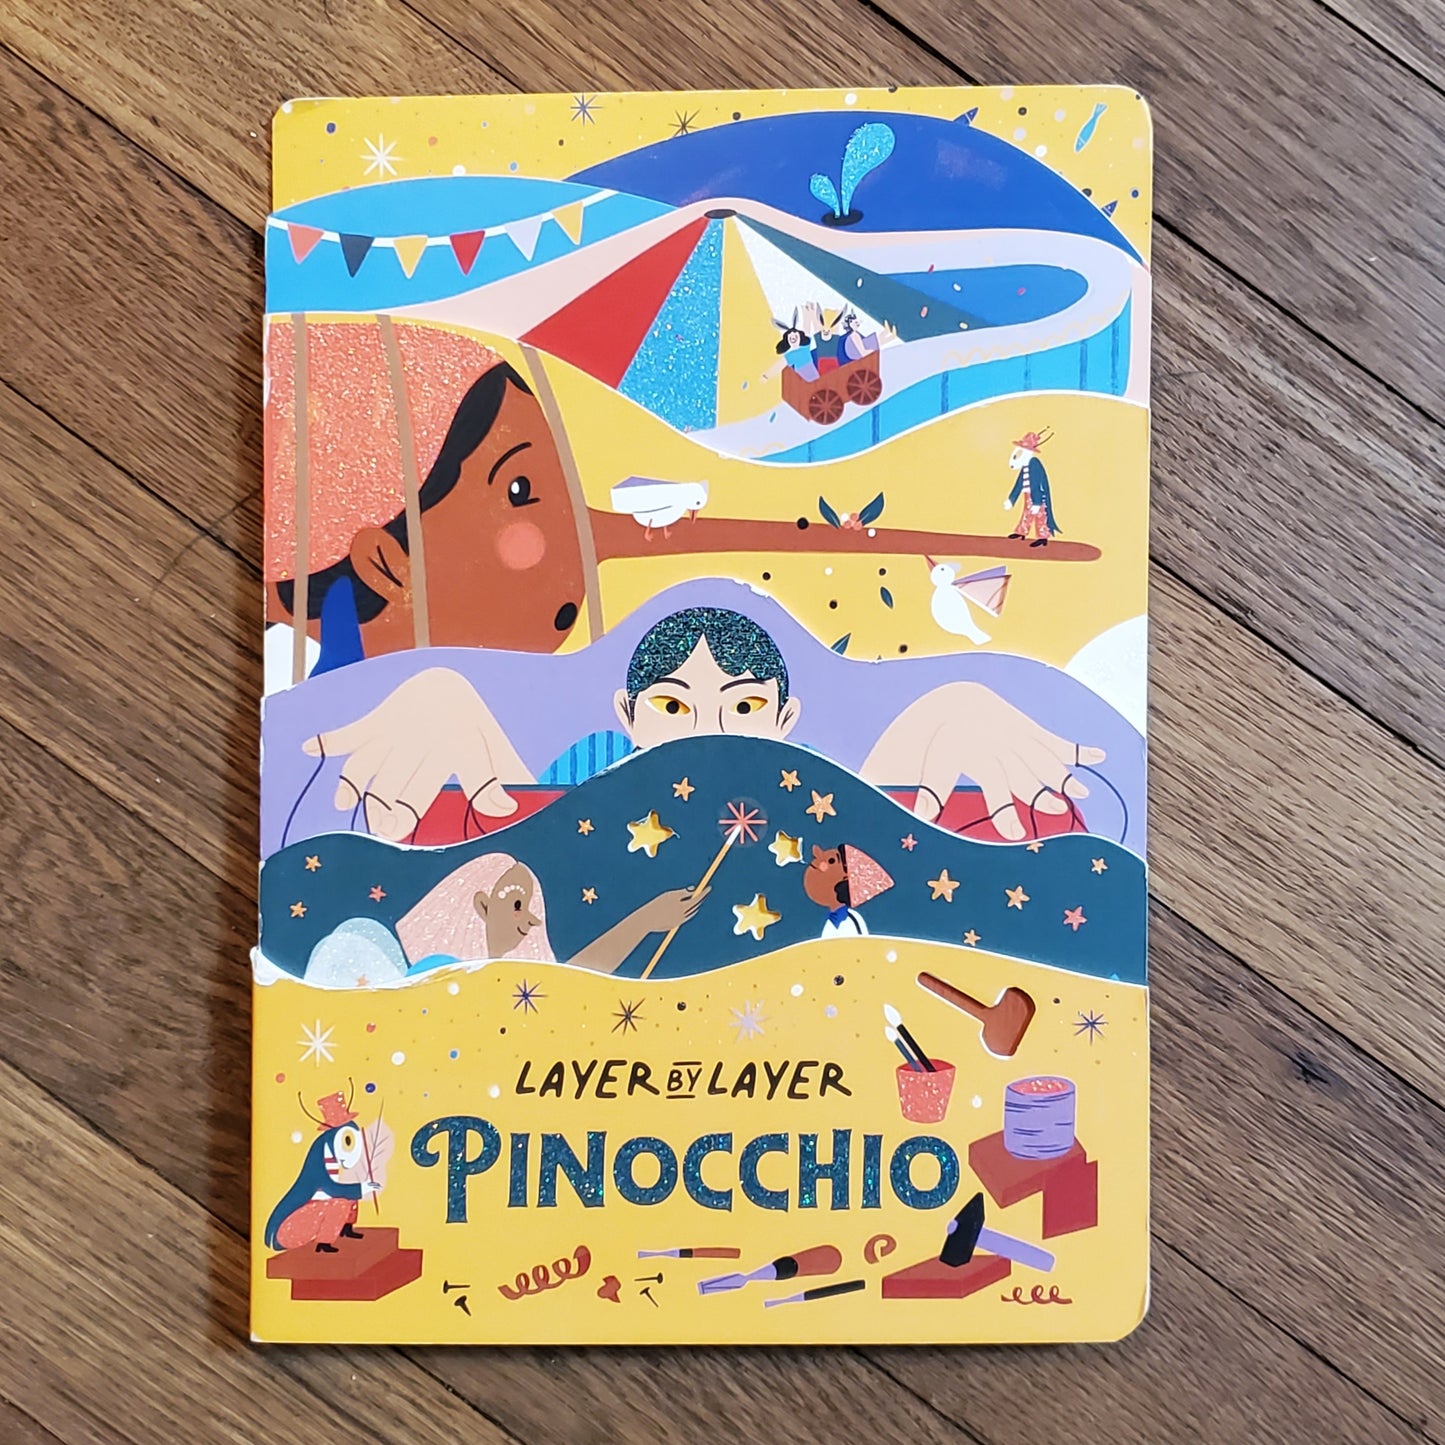 GB Board Book - Pinocchio (layer by layer)